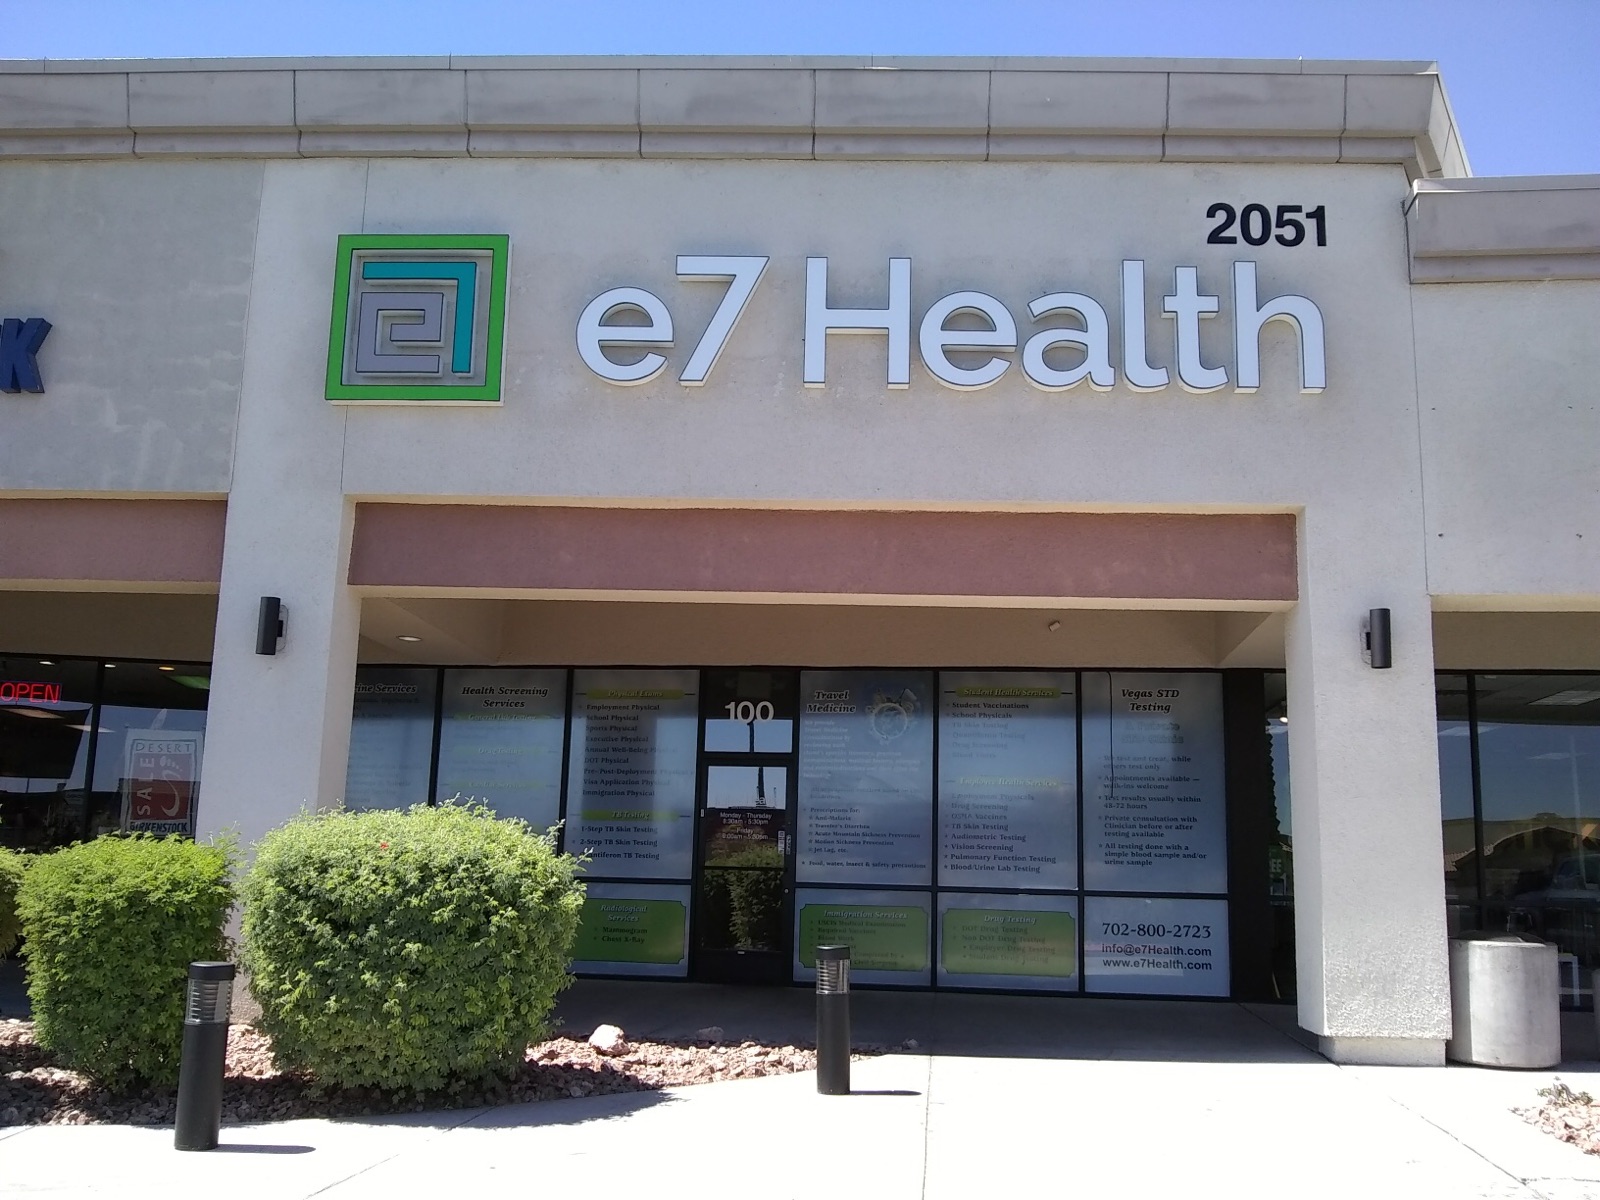 e7 Health